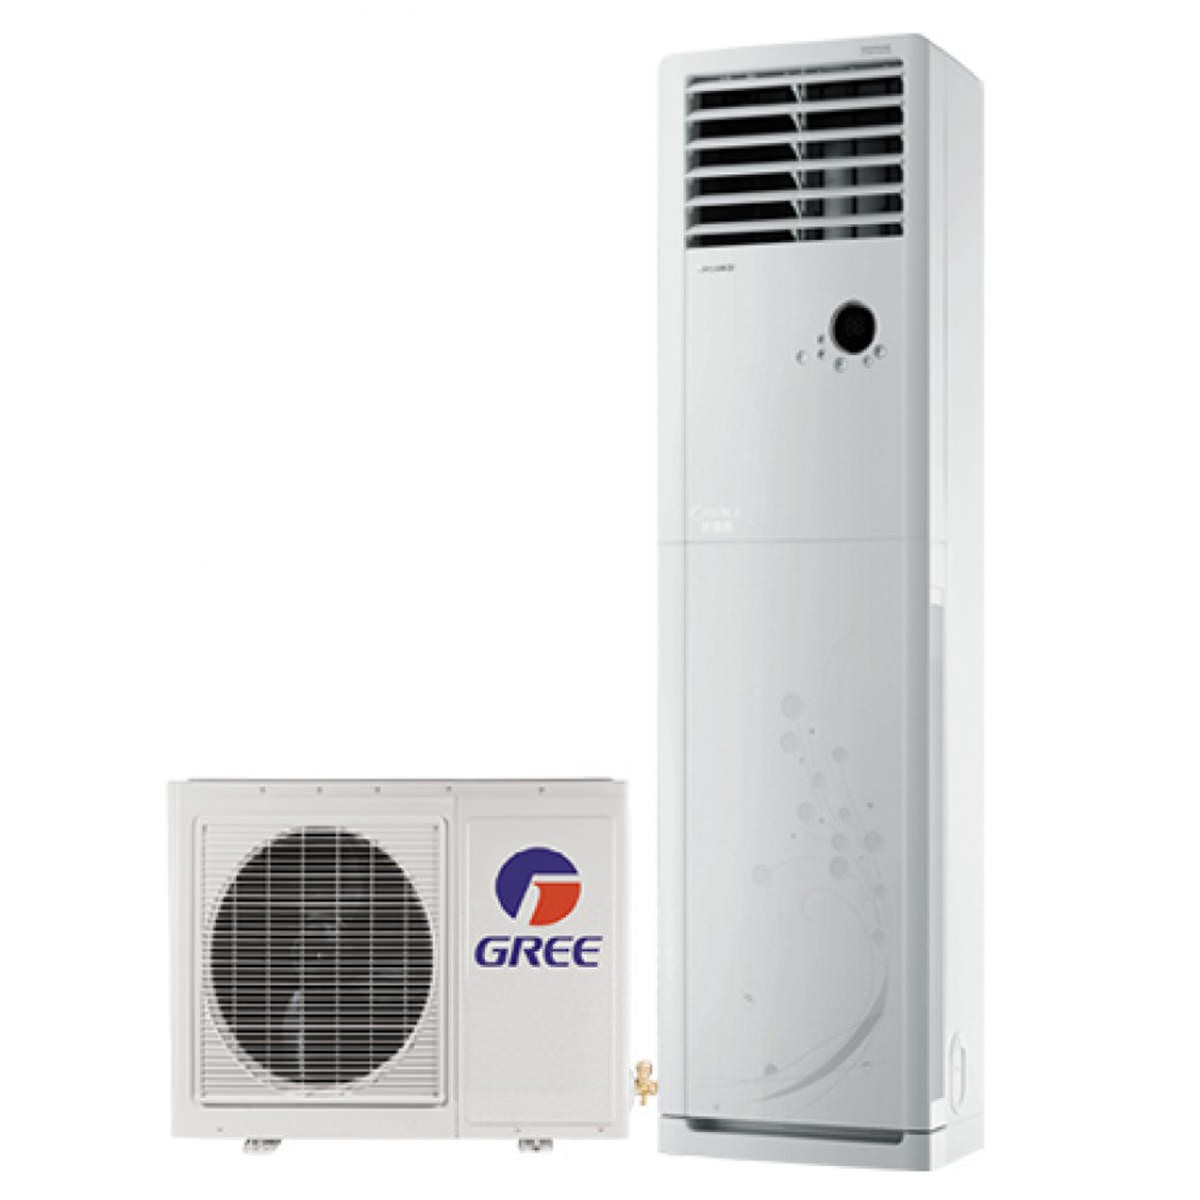 Gree Floor Standing Air Conditioner 20 Ton Gf 24cd Image1 